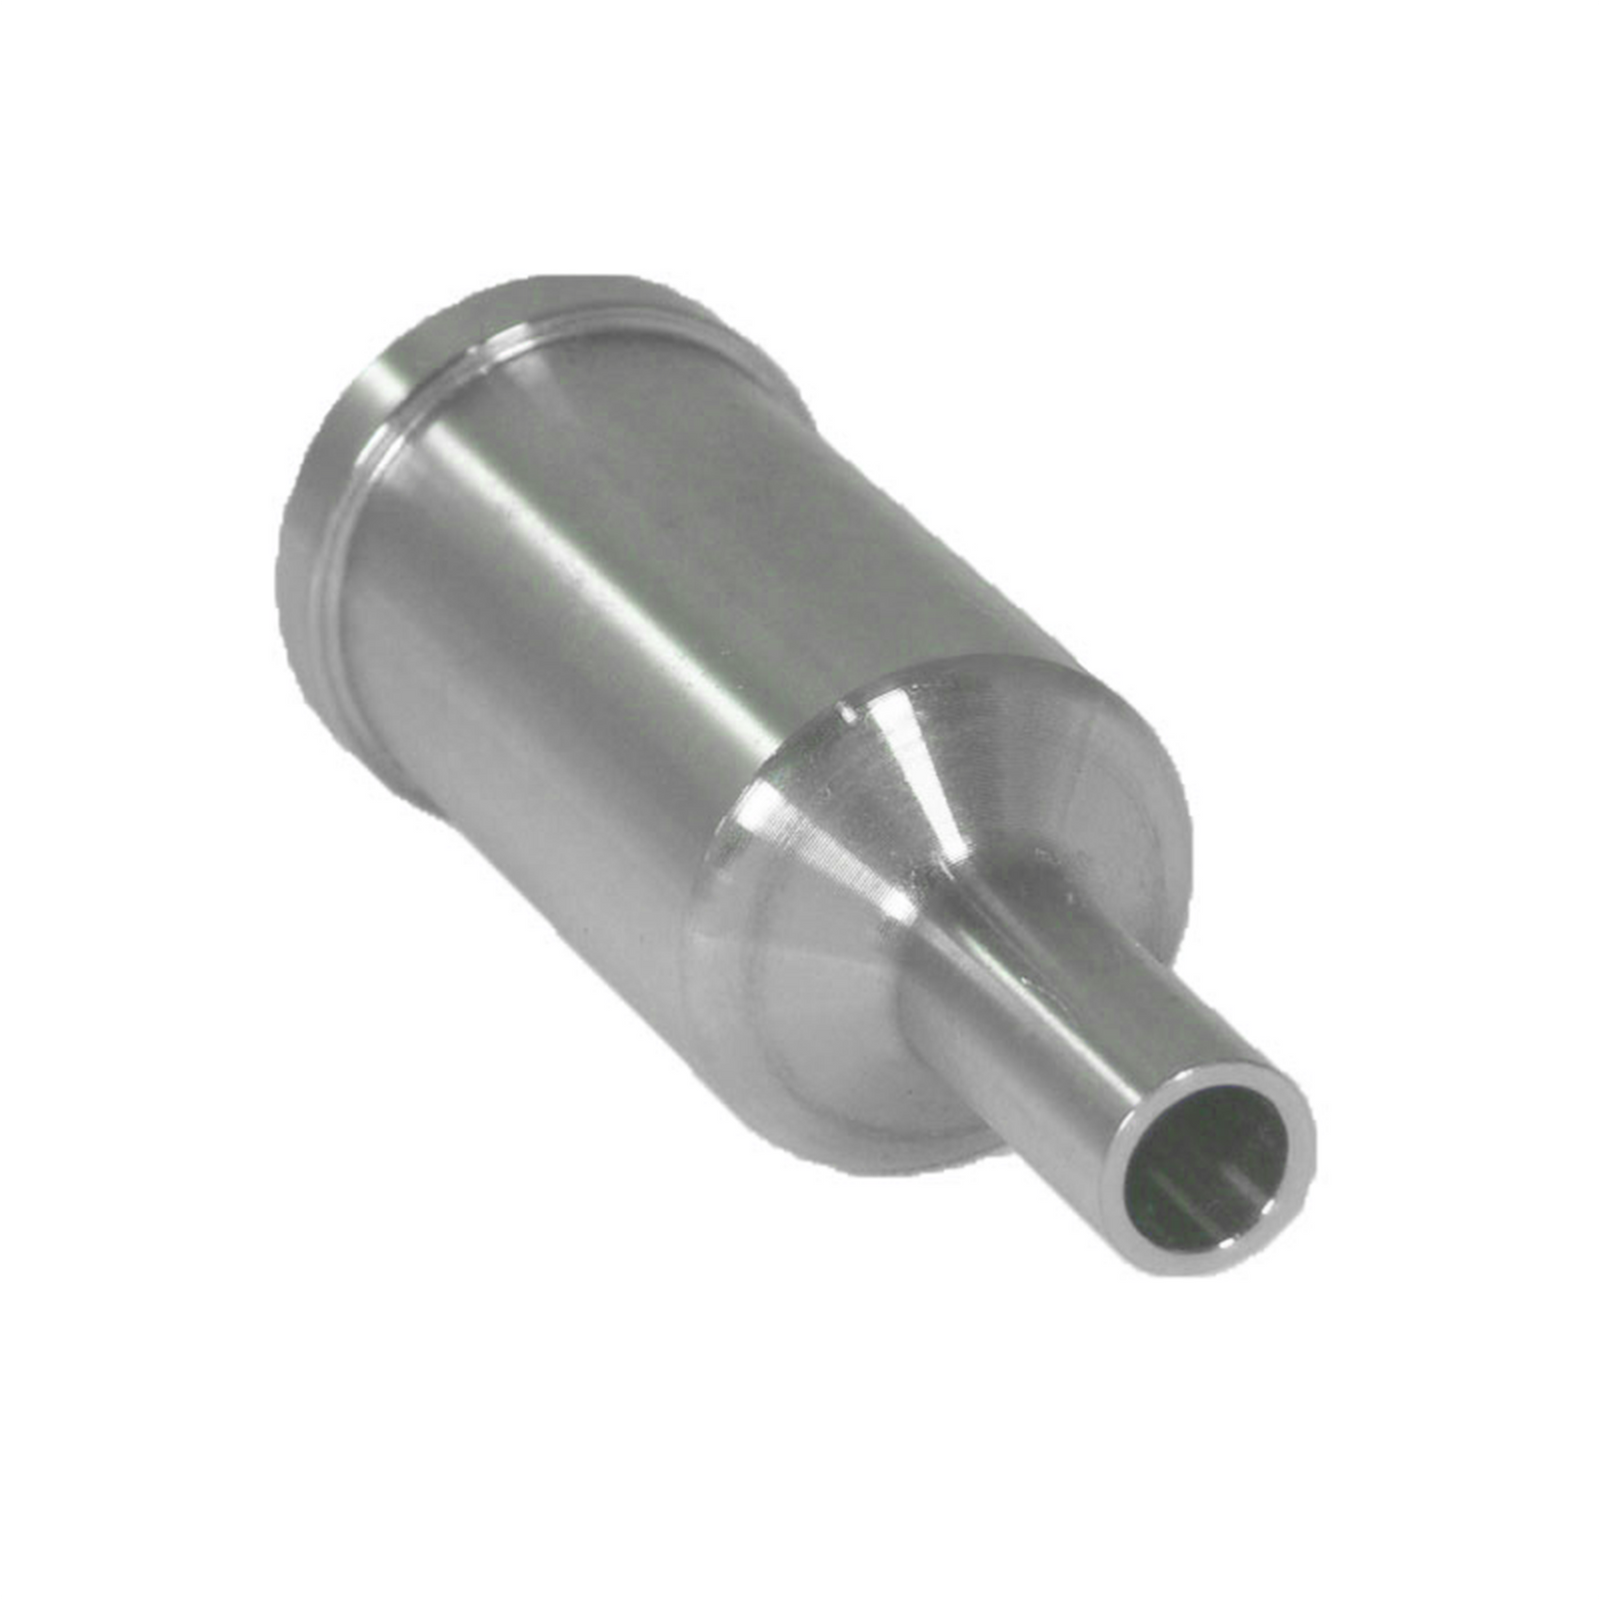 8mm dispensing nozzle filling tip